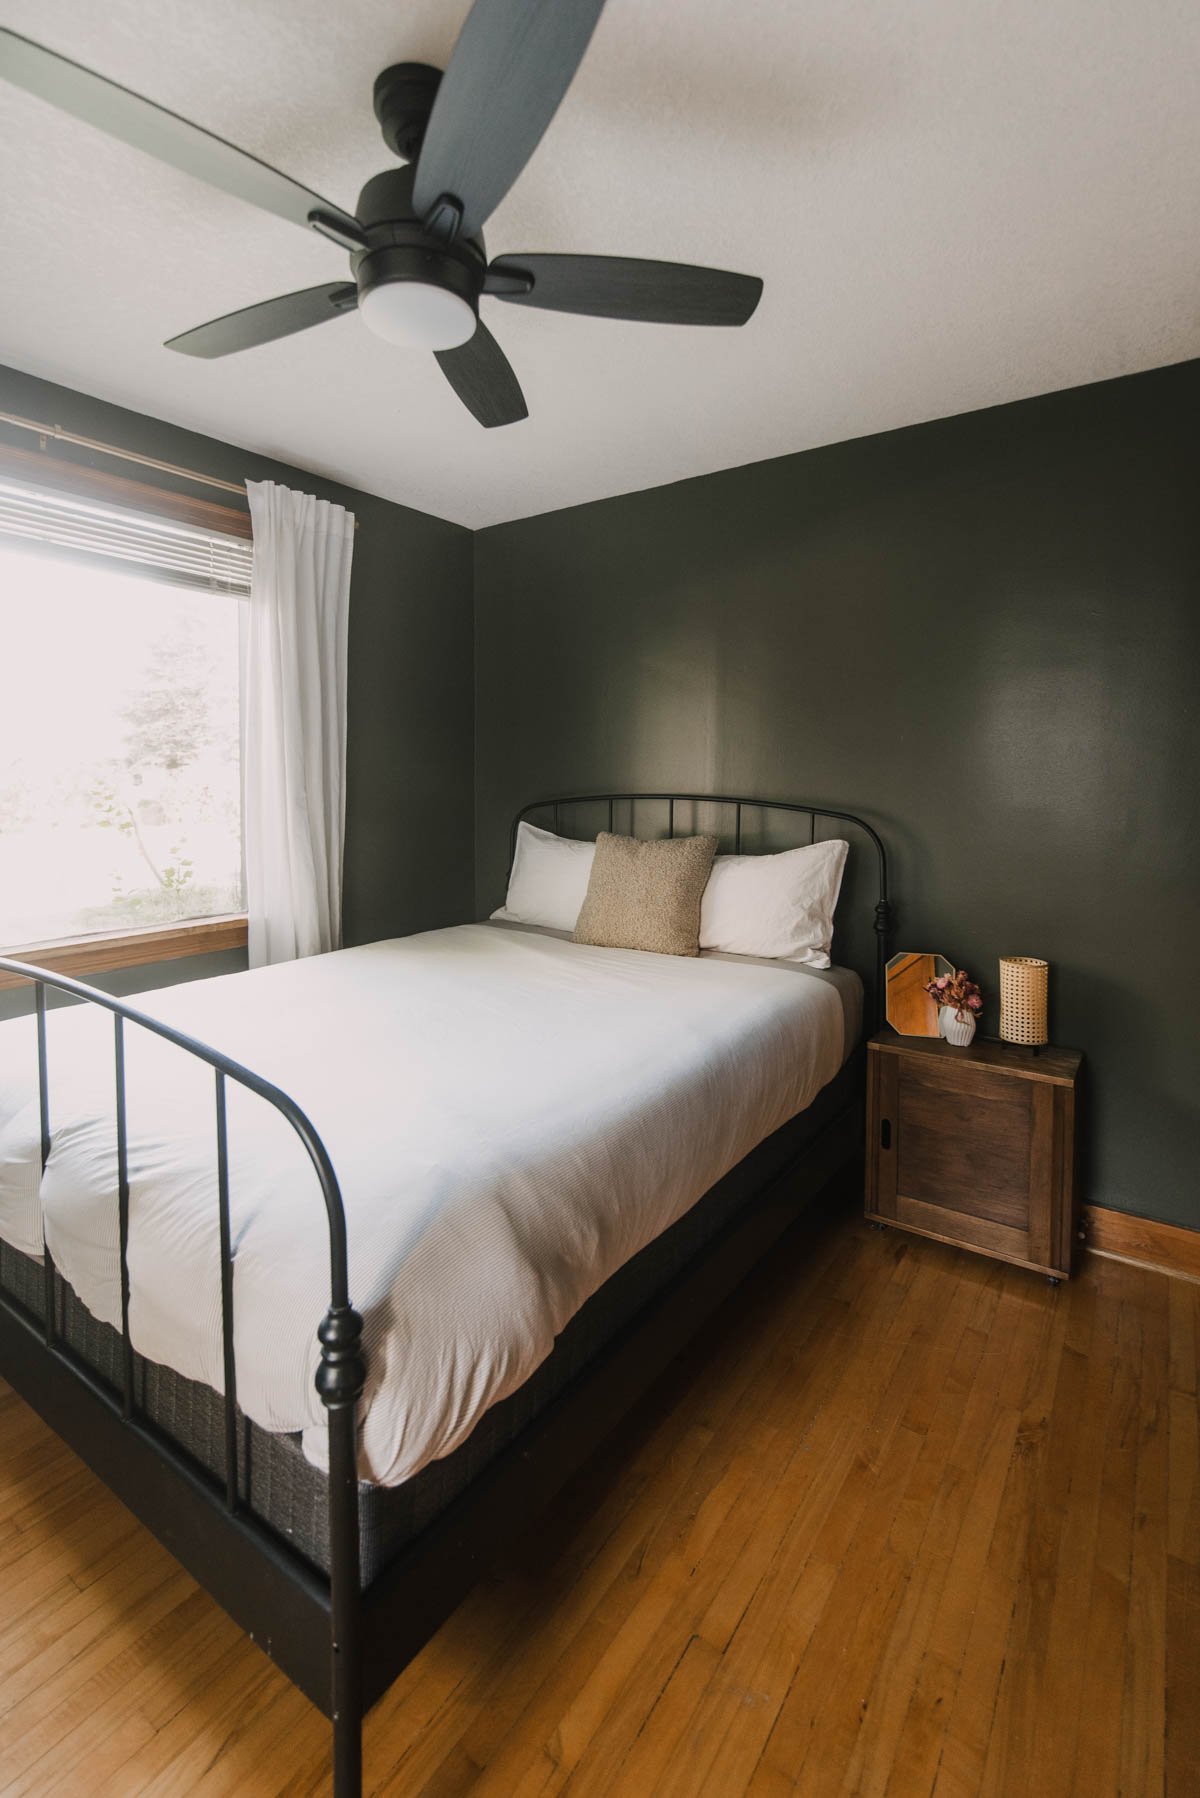 Cozy Green bedroom with wood trim